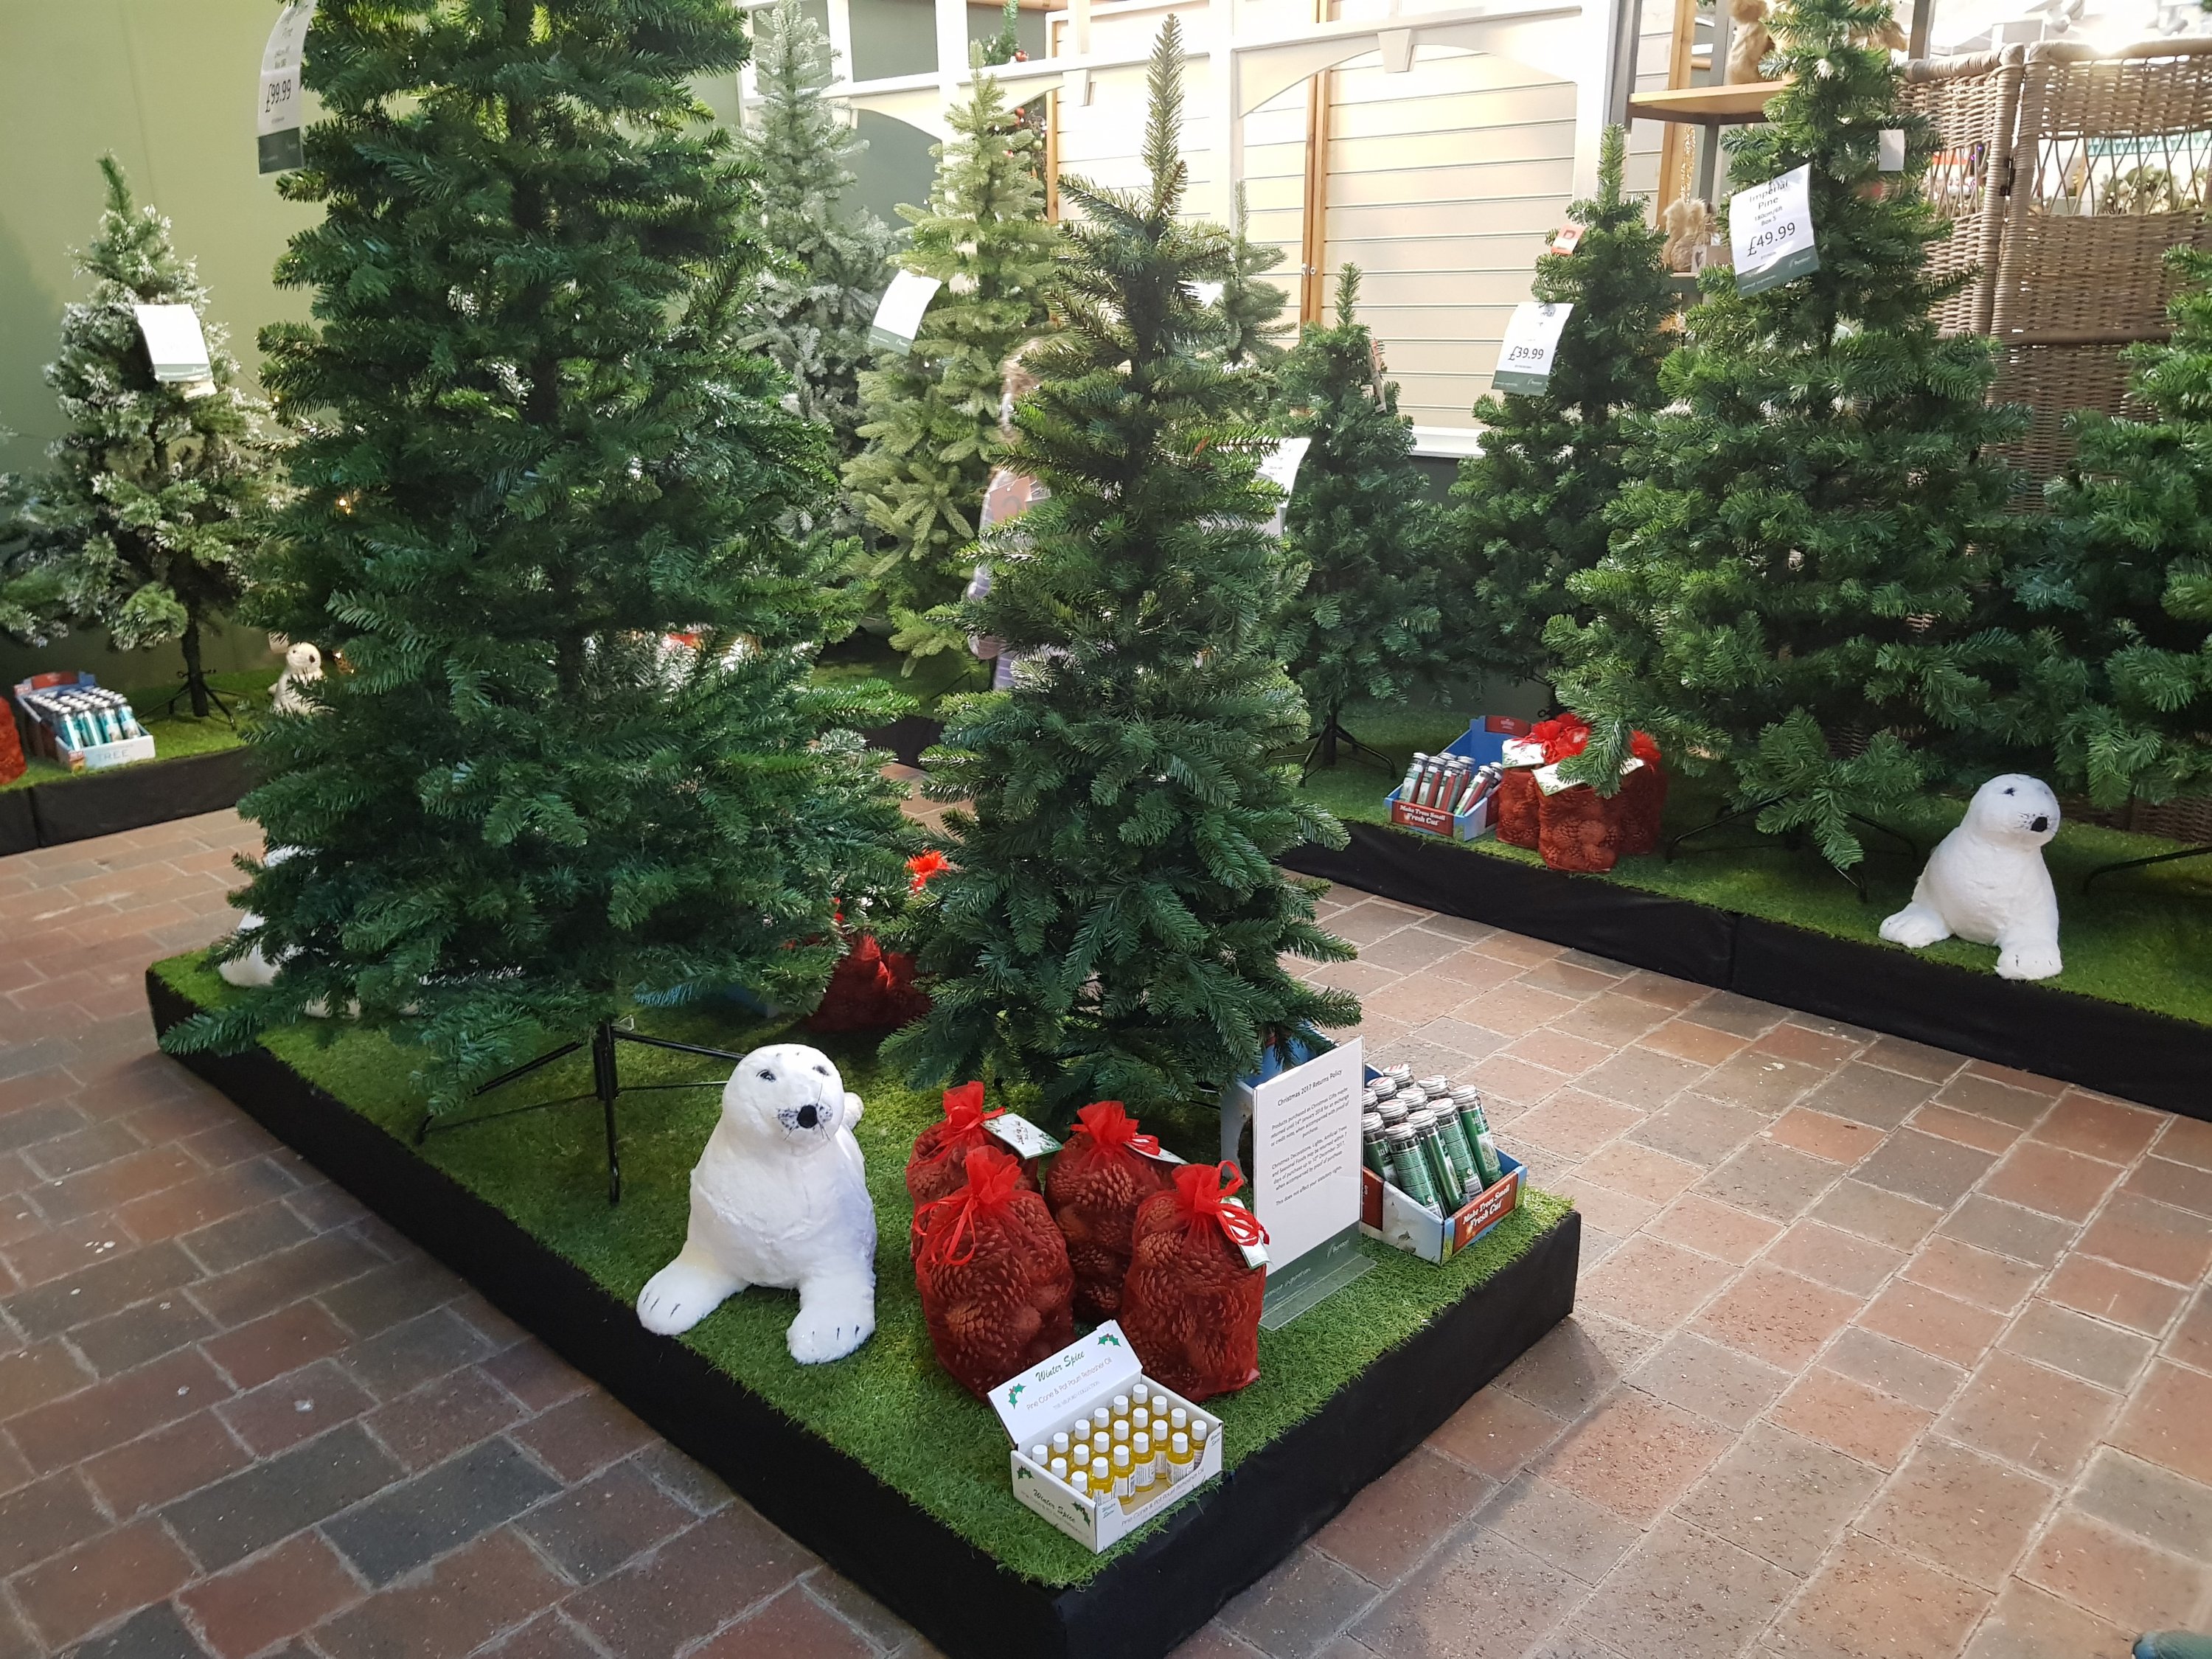 xmas display at Burston with Christmas trees and seals